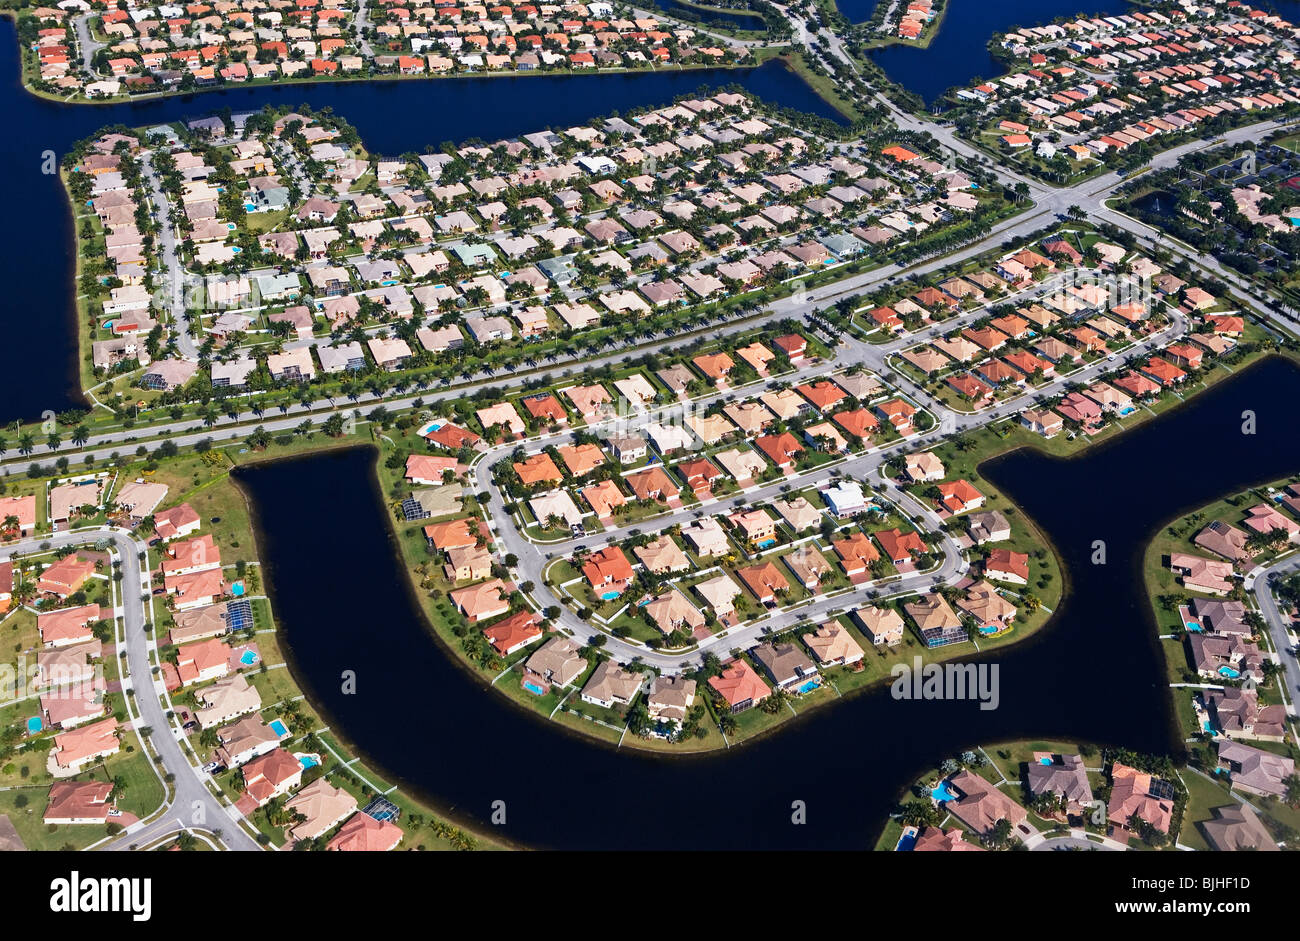 Aerial view of neighborhood in Florida Stock Photo